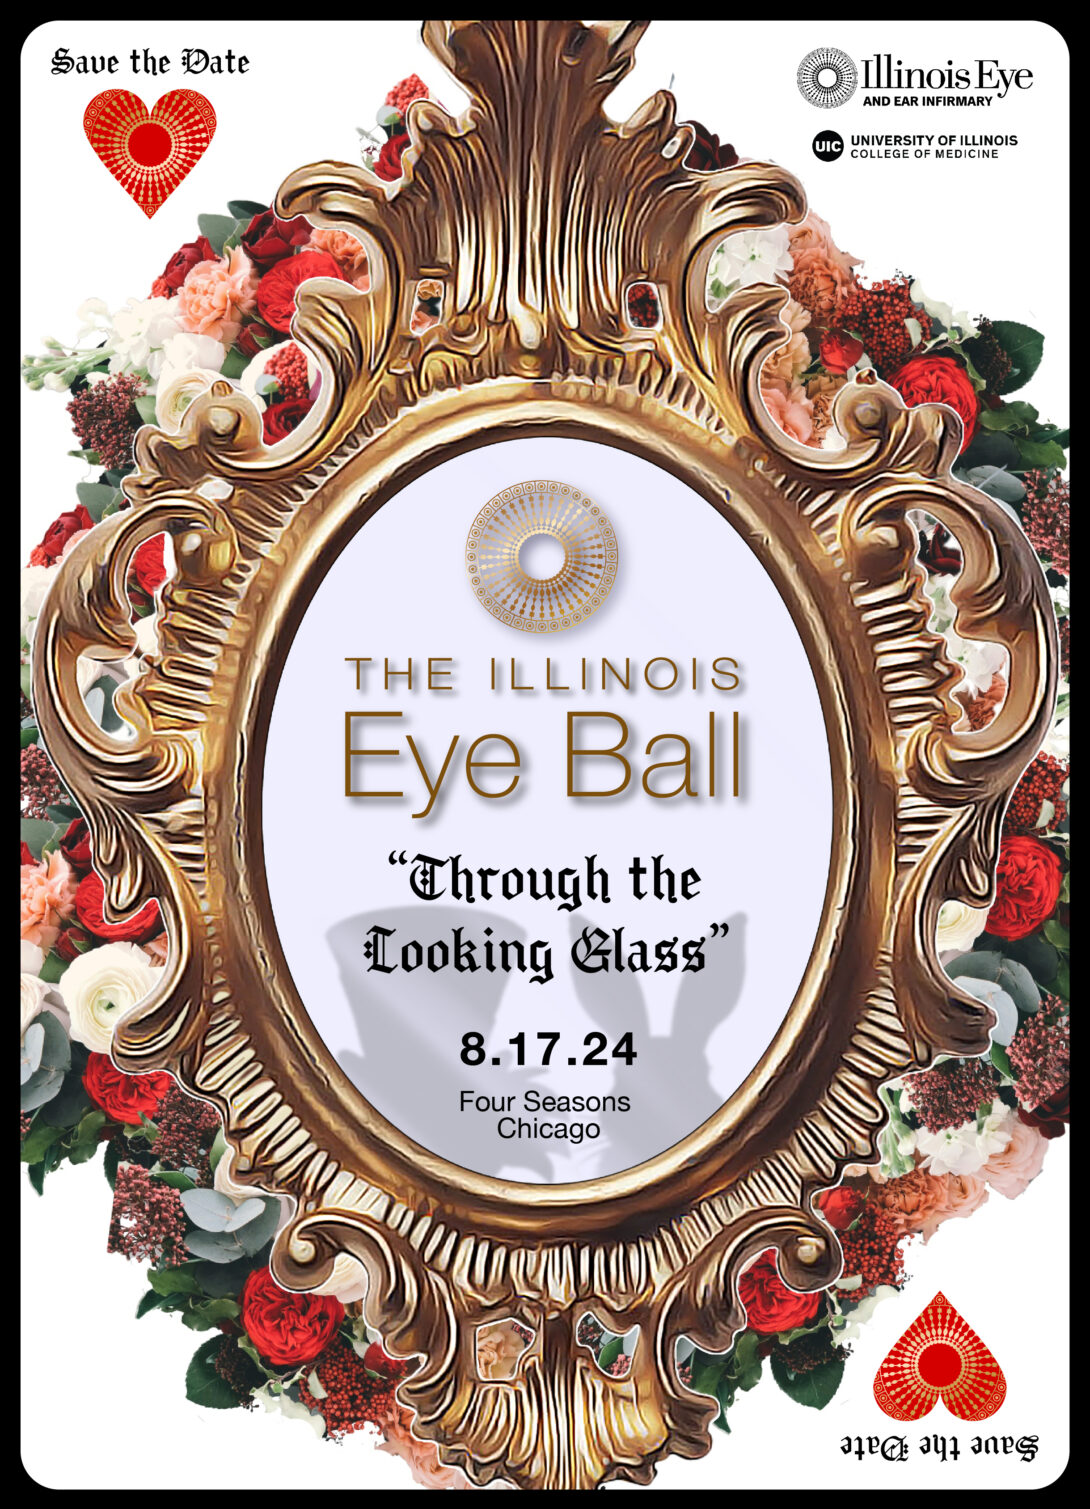 The Illinois Eye Ball, themed 